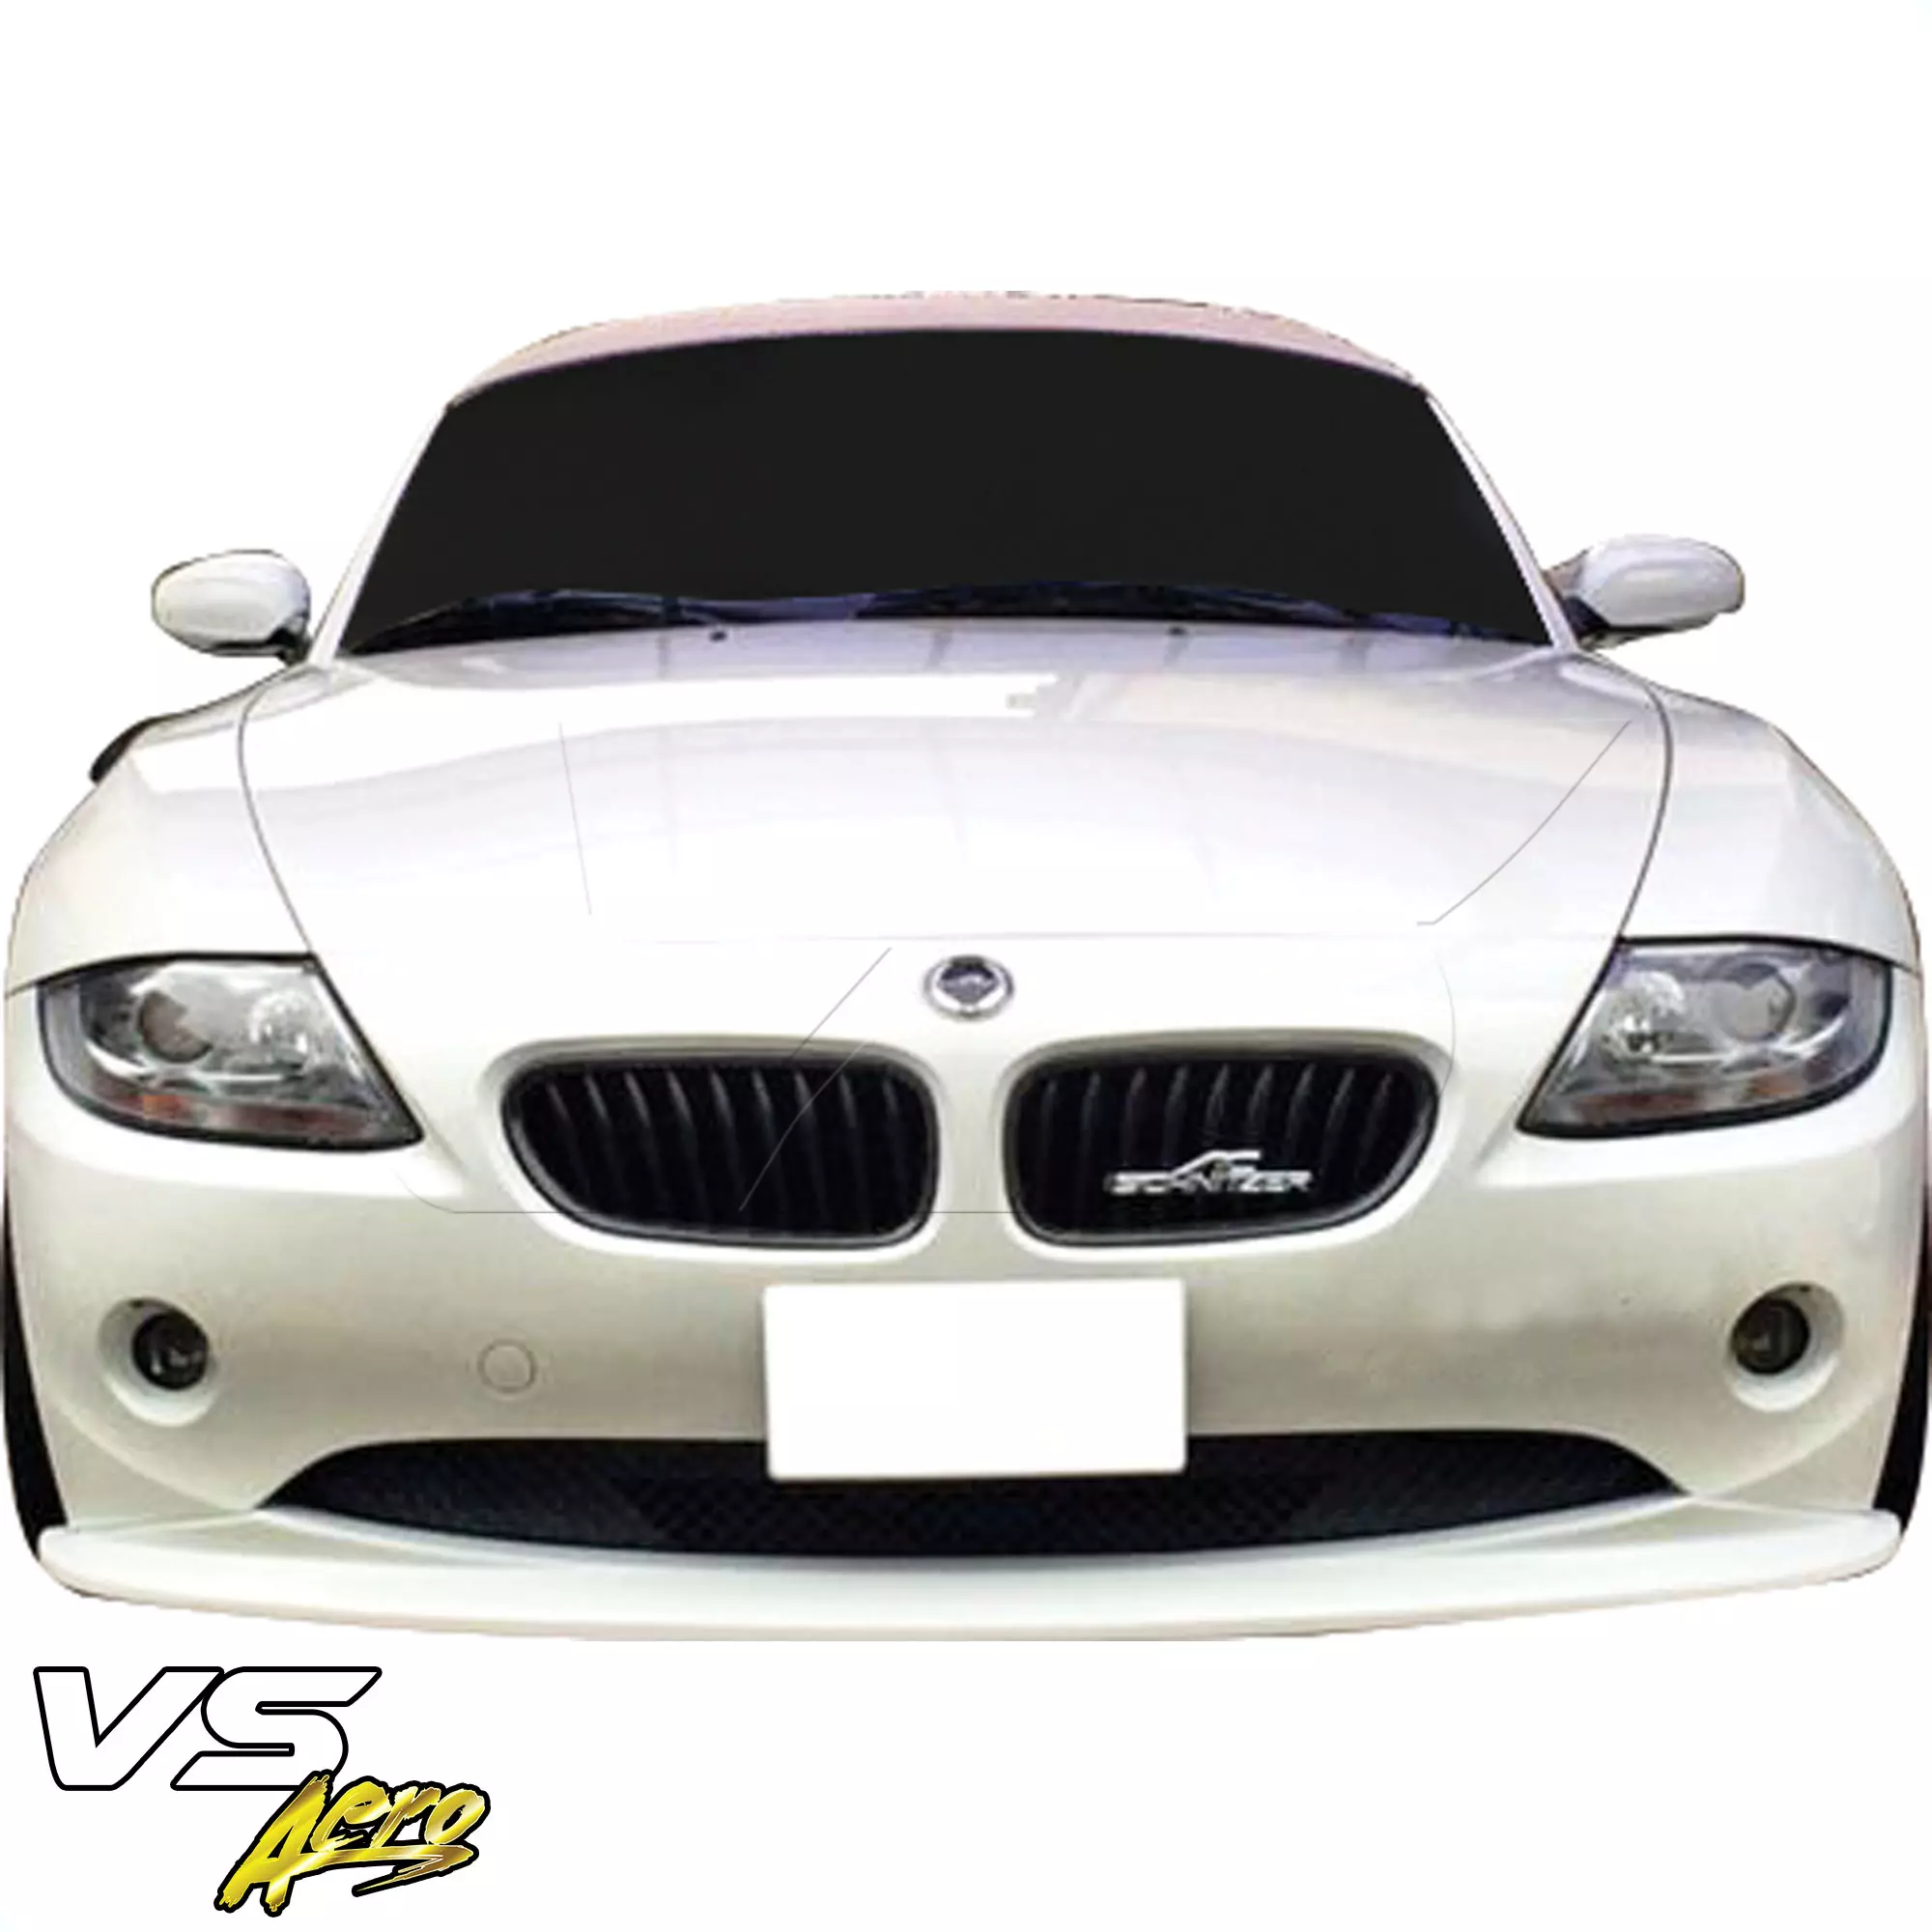 VSaero FRP HAMA Body Kit 4pc > BMW Z4 E85 2003-2005 - Image 5